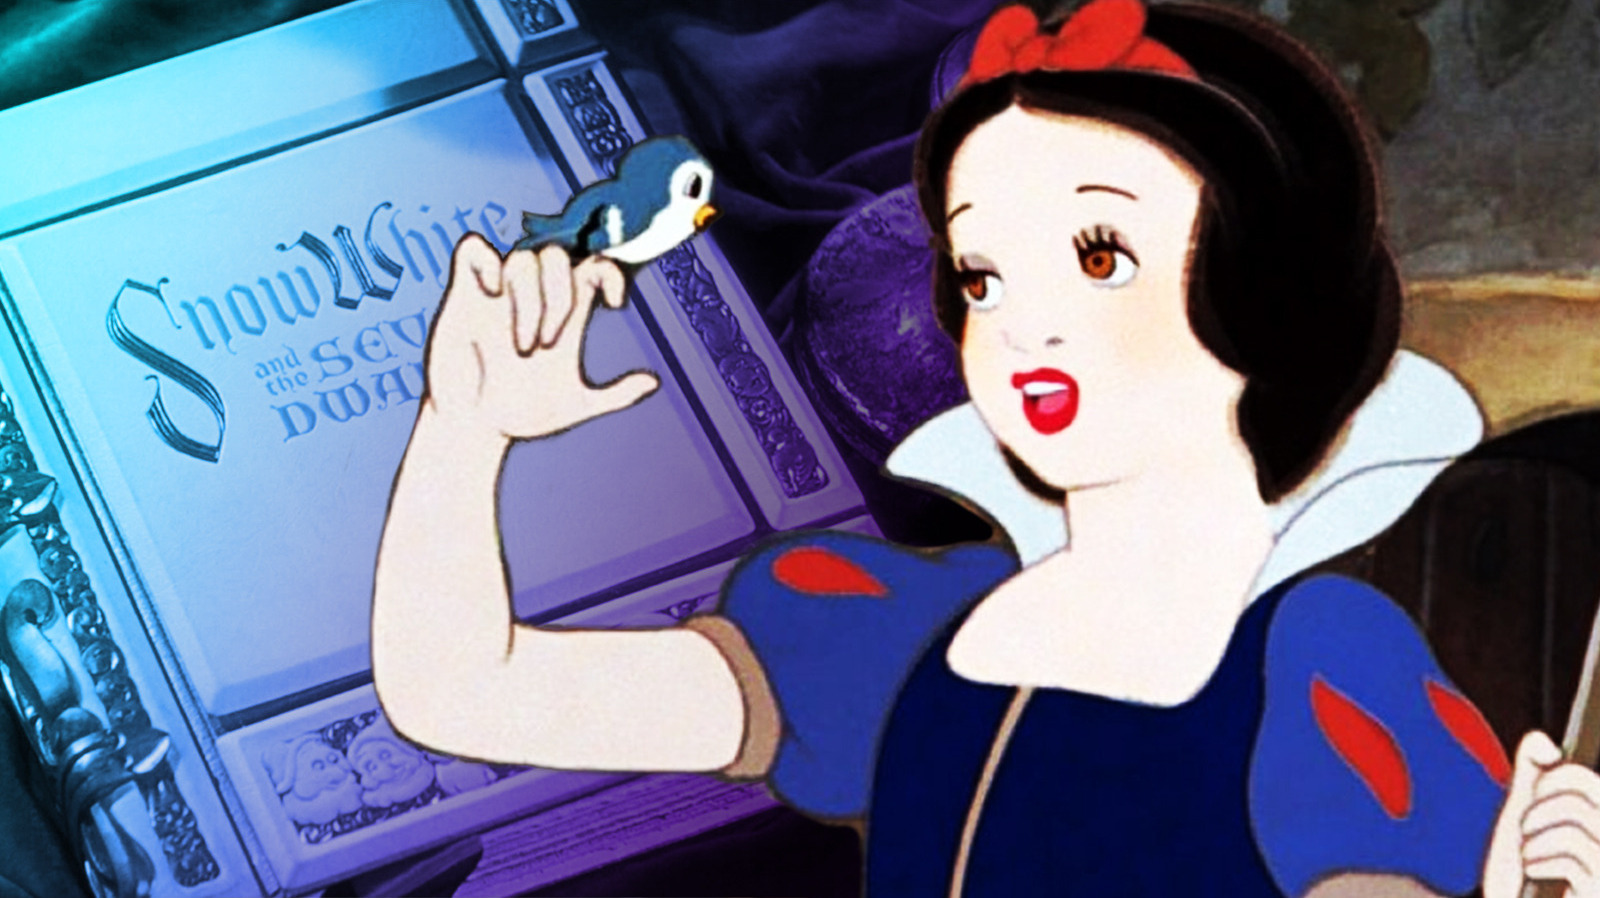 Snow White And The Seven Dwarfs Was Walt Disney's Biggest Box Office Gamble 